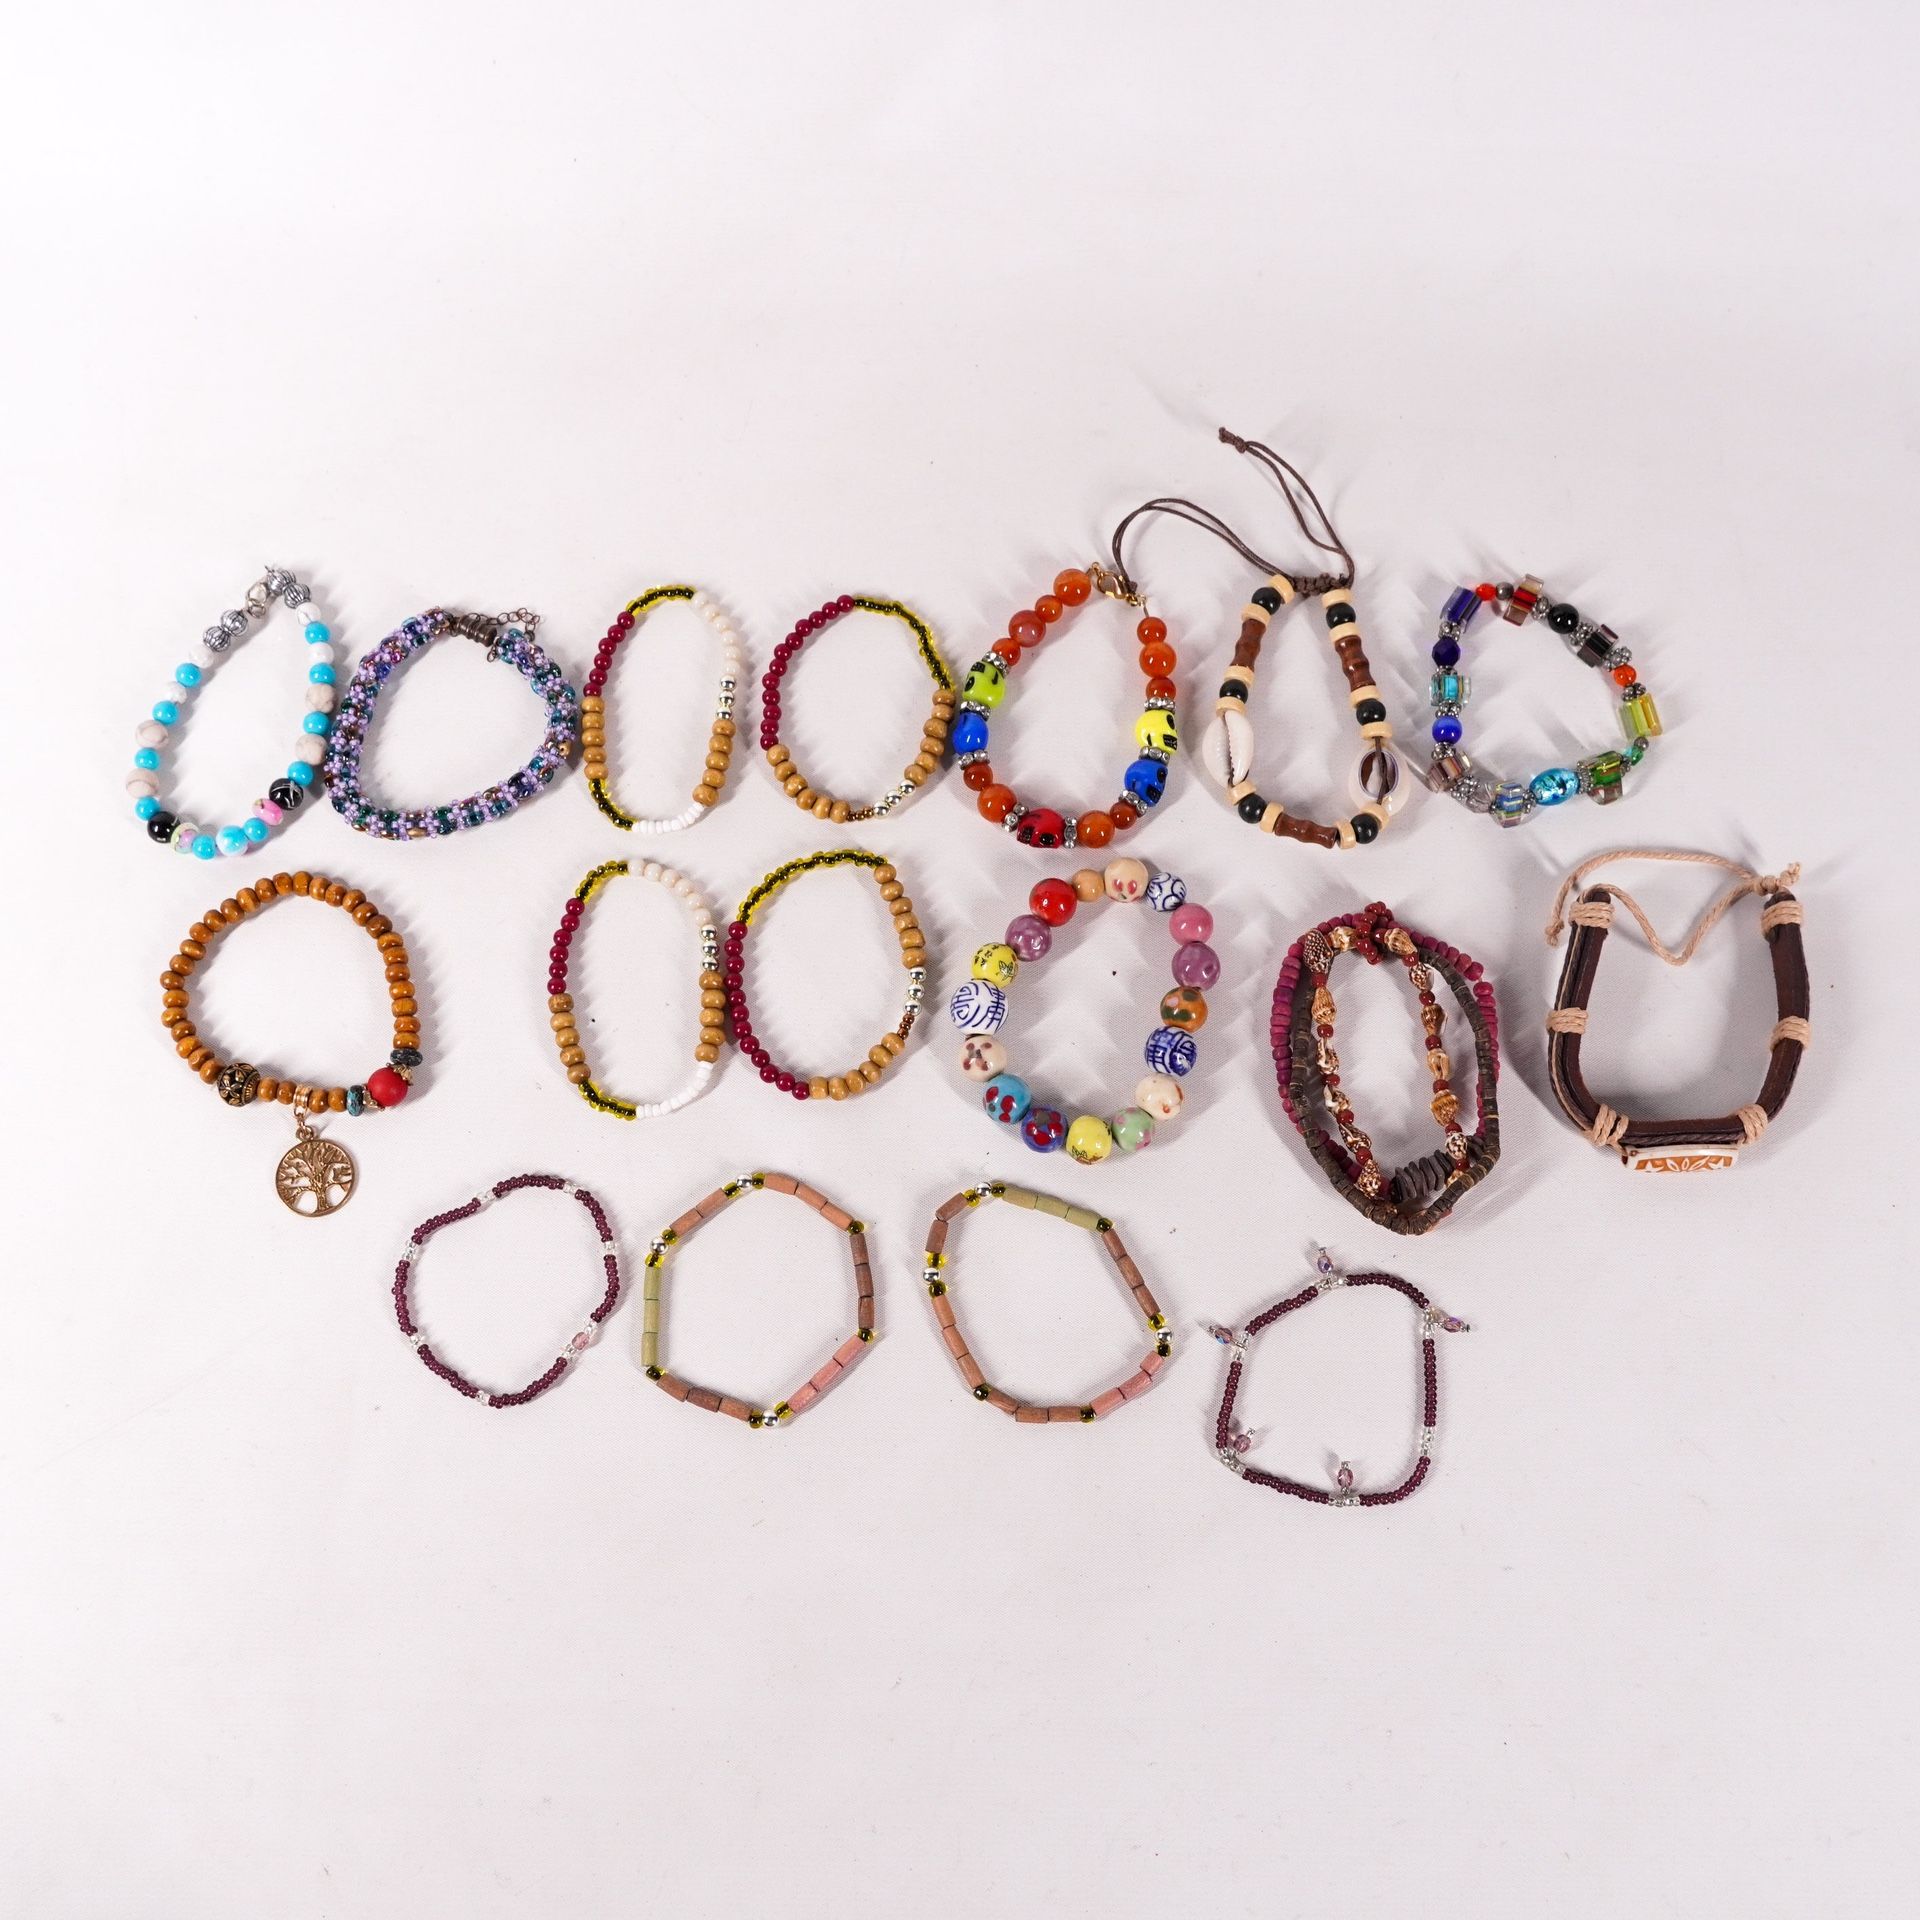 17 Glass Bead Beaded Plastic Wood Leather Bracelets Bangle Fashion Jewelry Lot